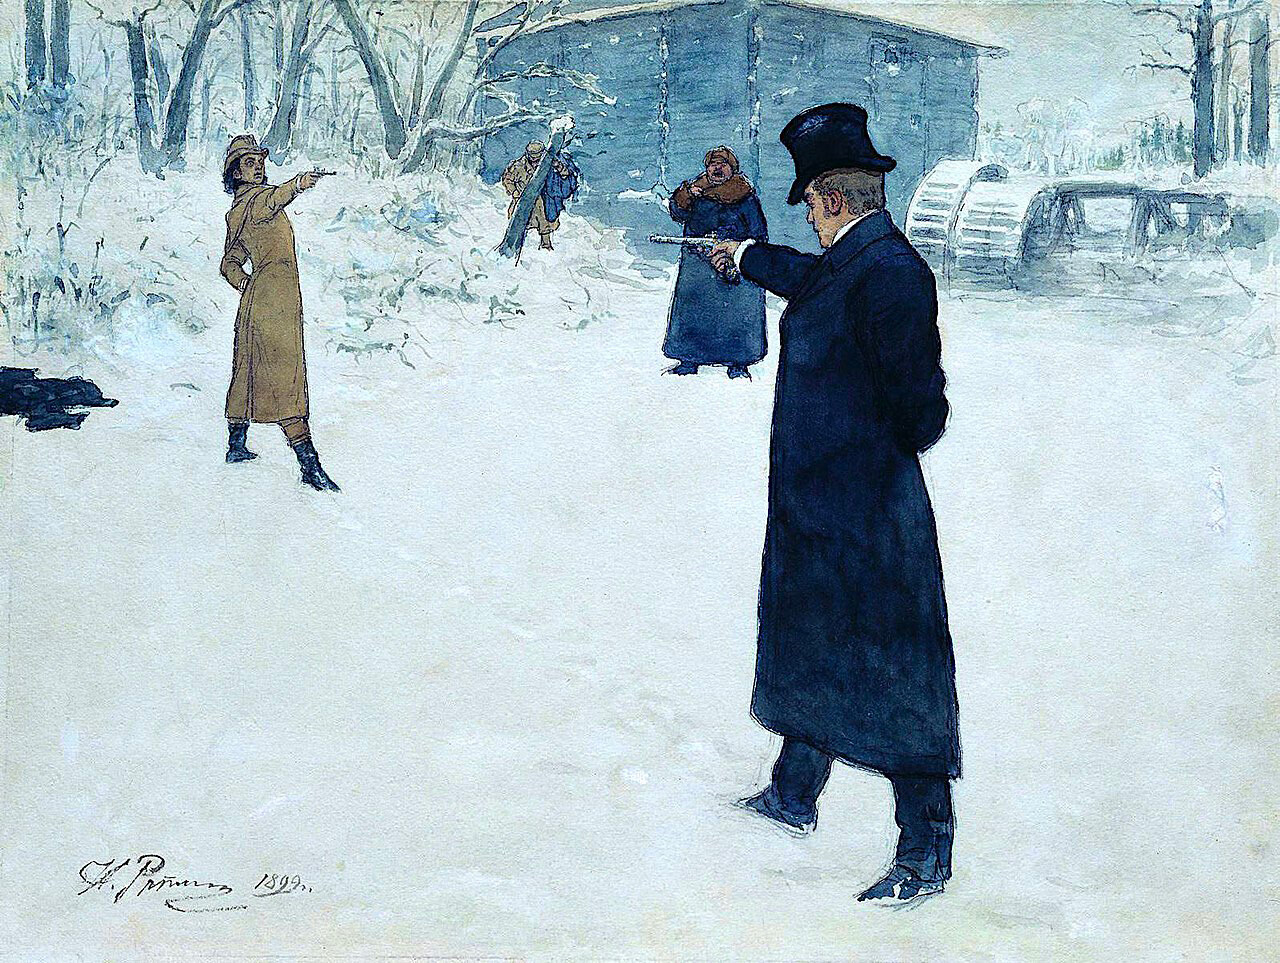 Eugene Onegin and Vladimir Lensky's duel. by Ilya Repin.